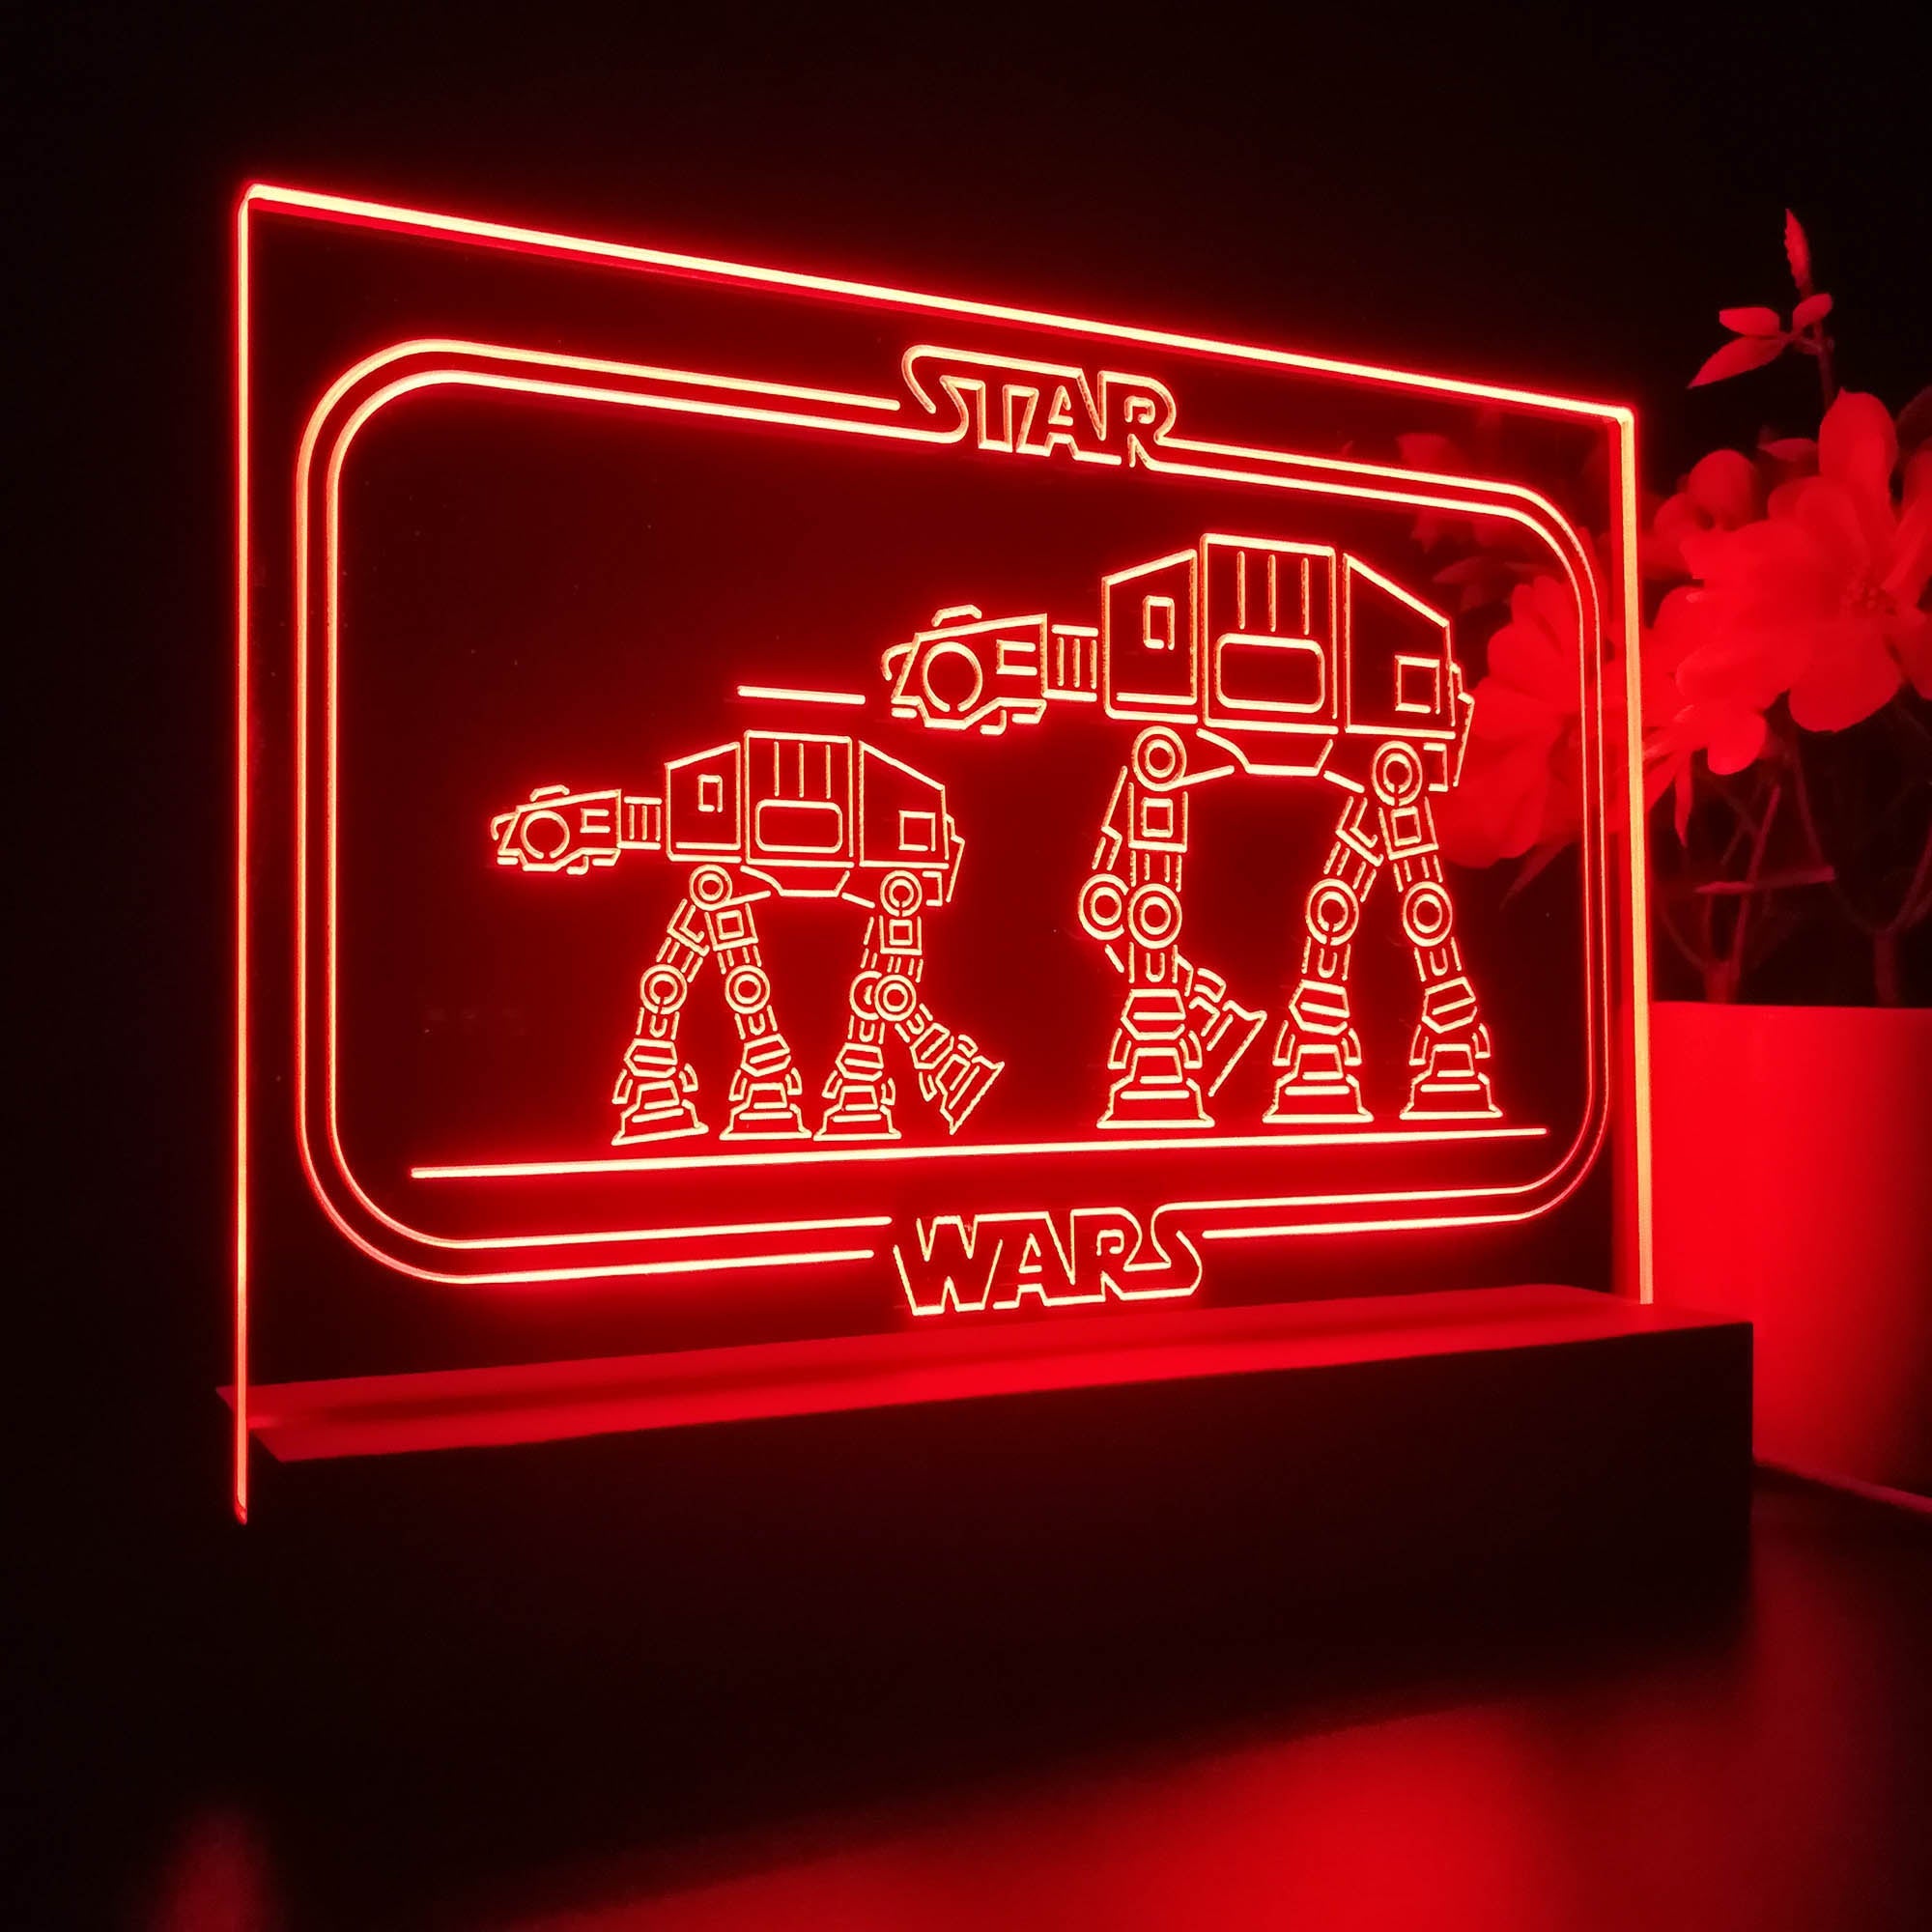 Stars Wars Home Theater 3D Illusion Night Light Desk Lamp